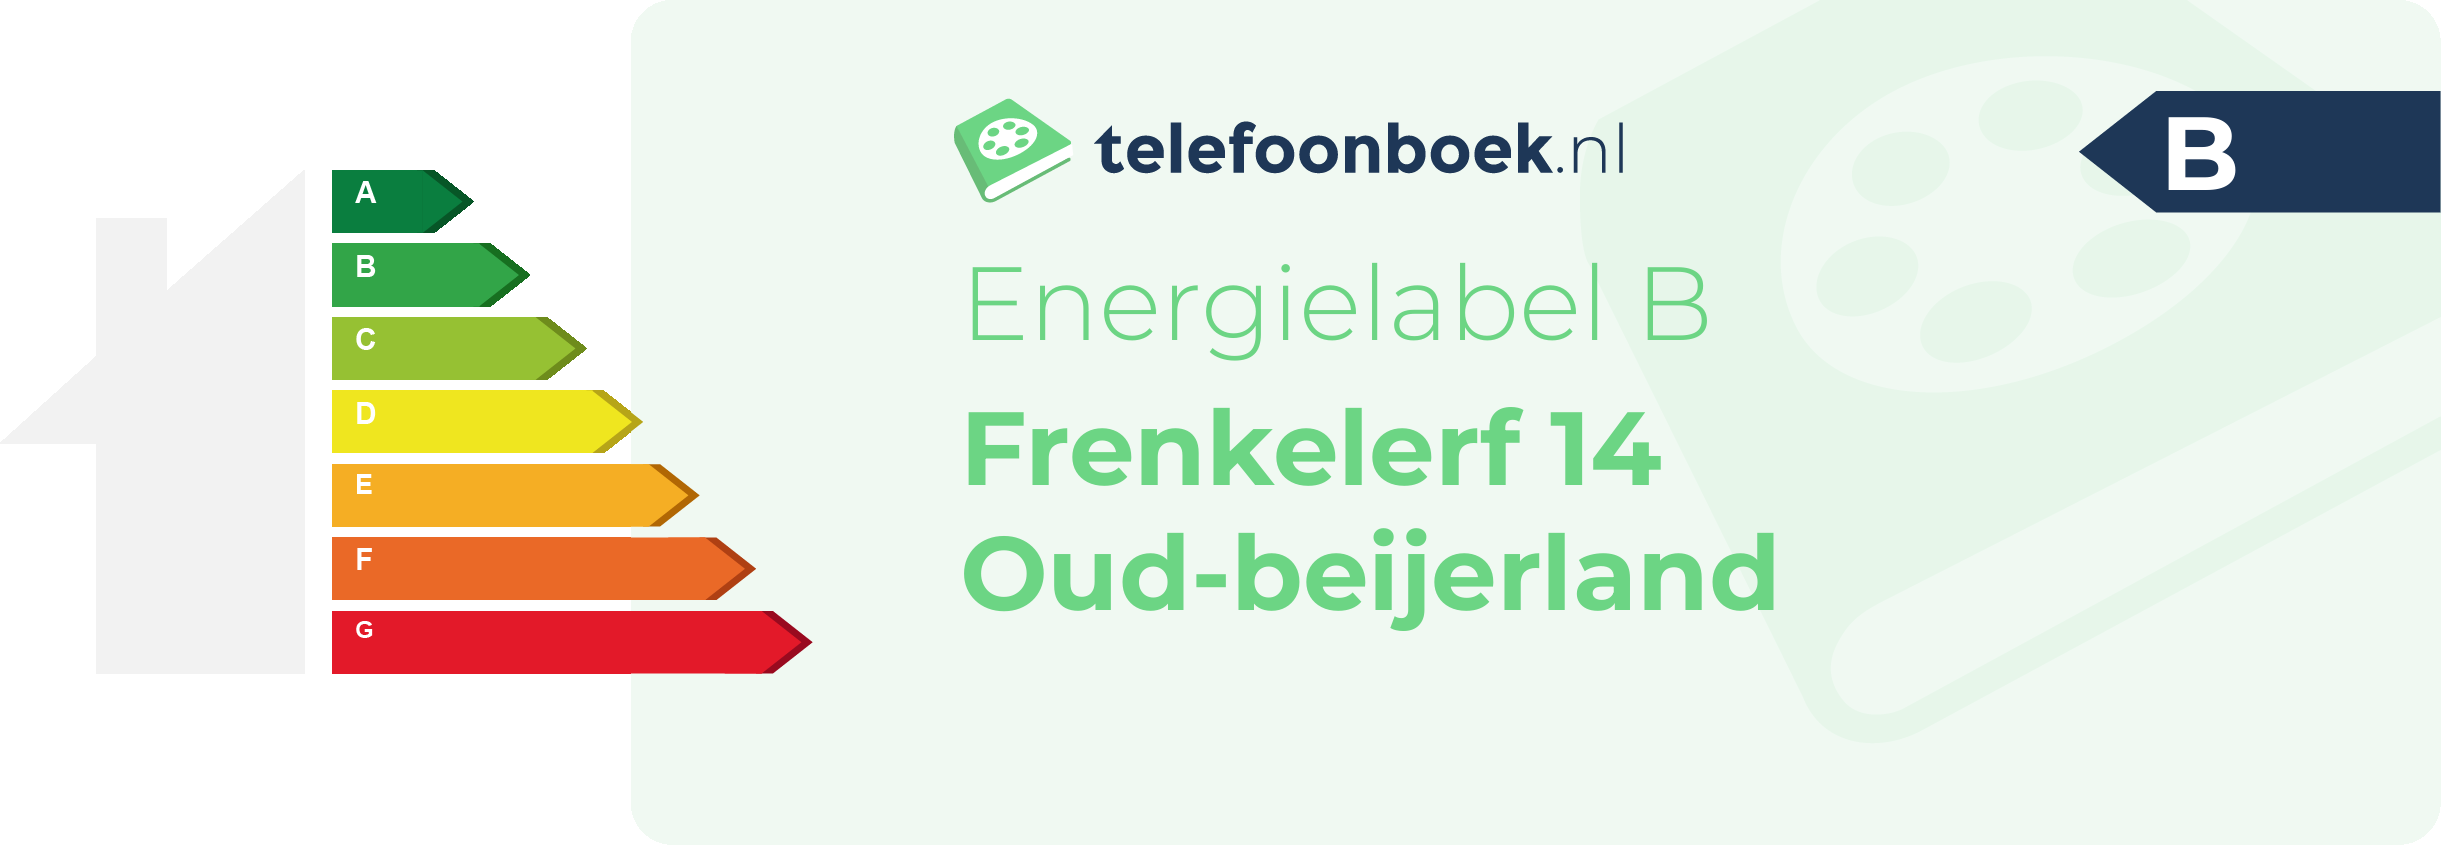 Energielabel Frenkelerf 14 Oud-Beijerland